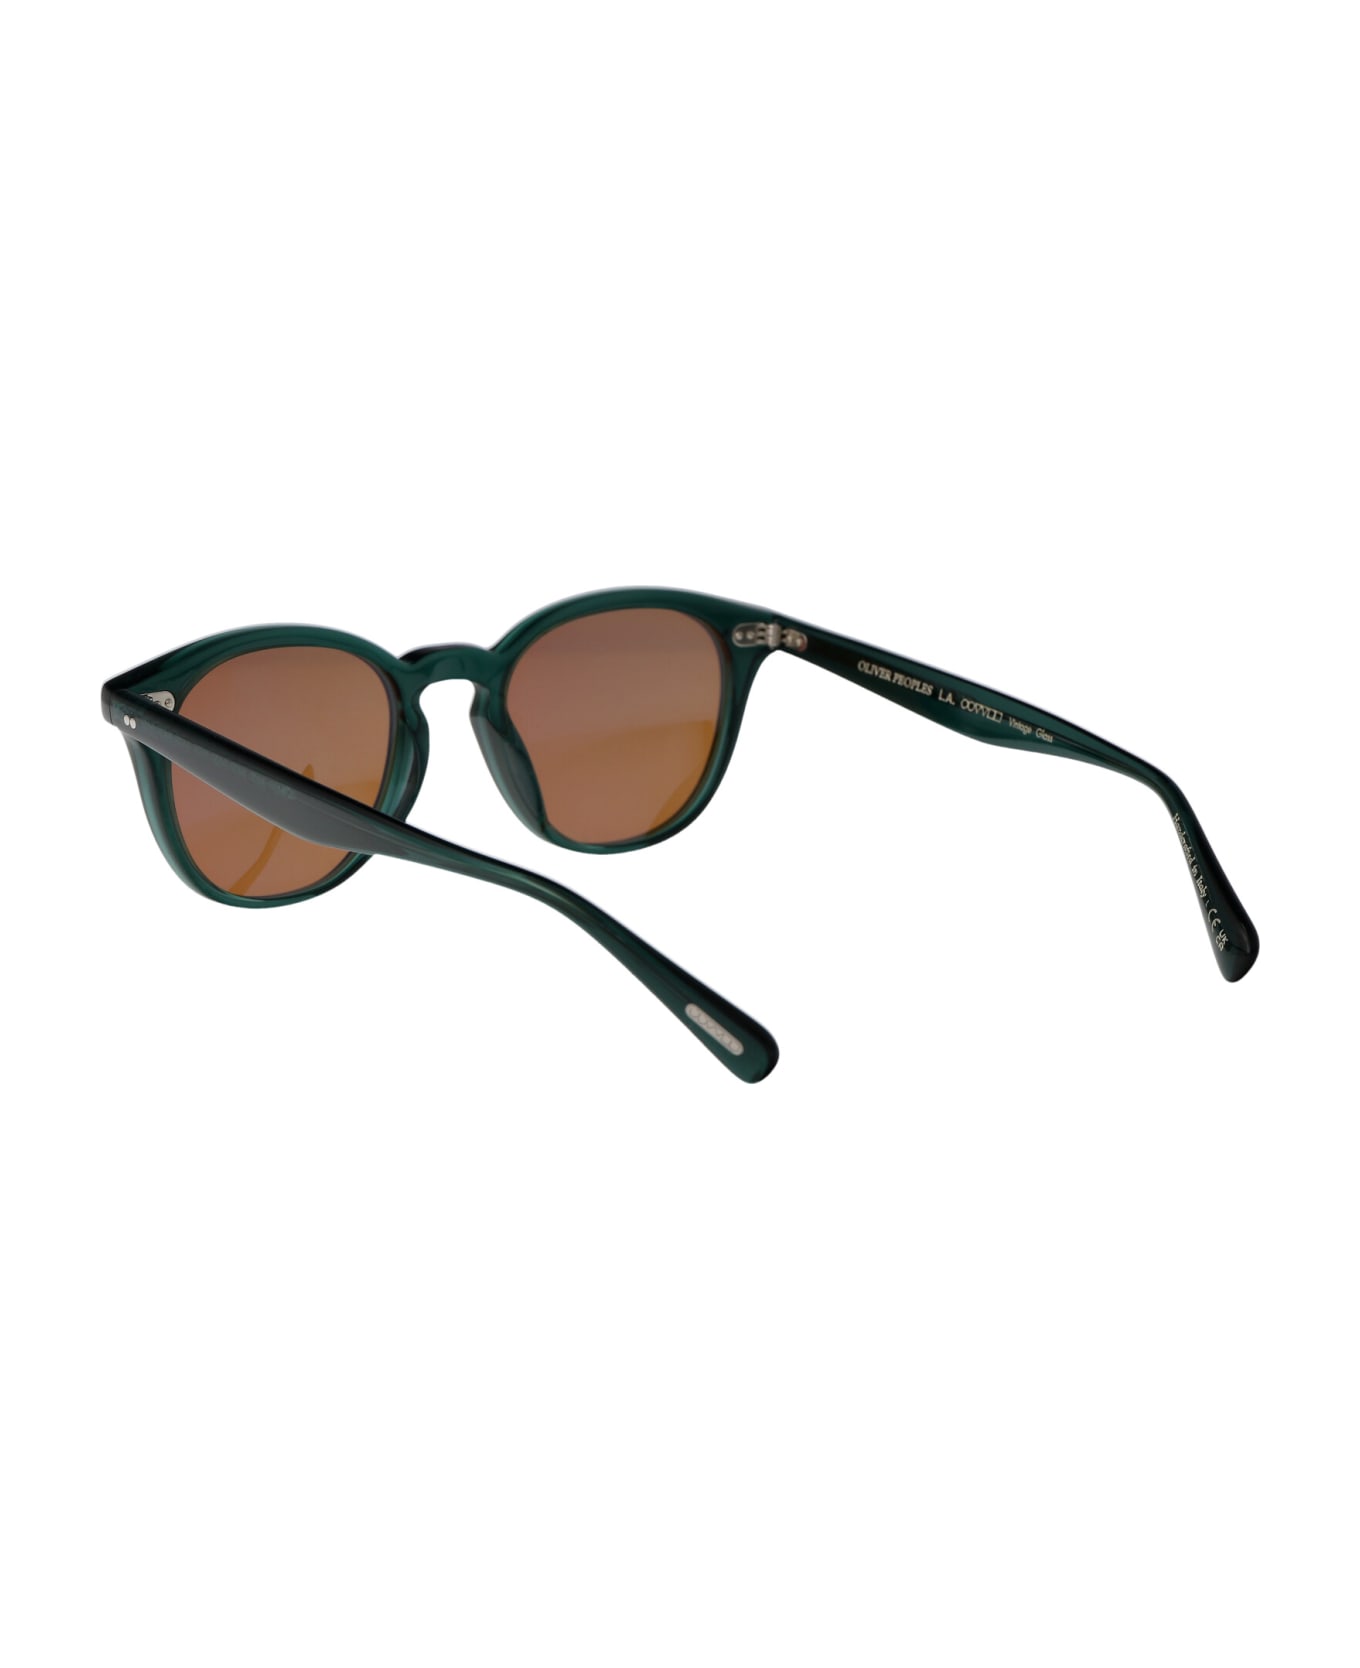 Oliver Peoples Desmon Sun Sunglasses - 176353 Translucent Dark Teal サングラス